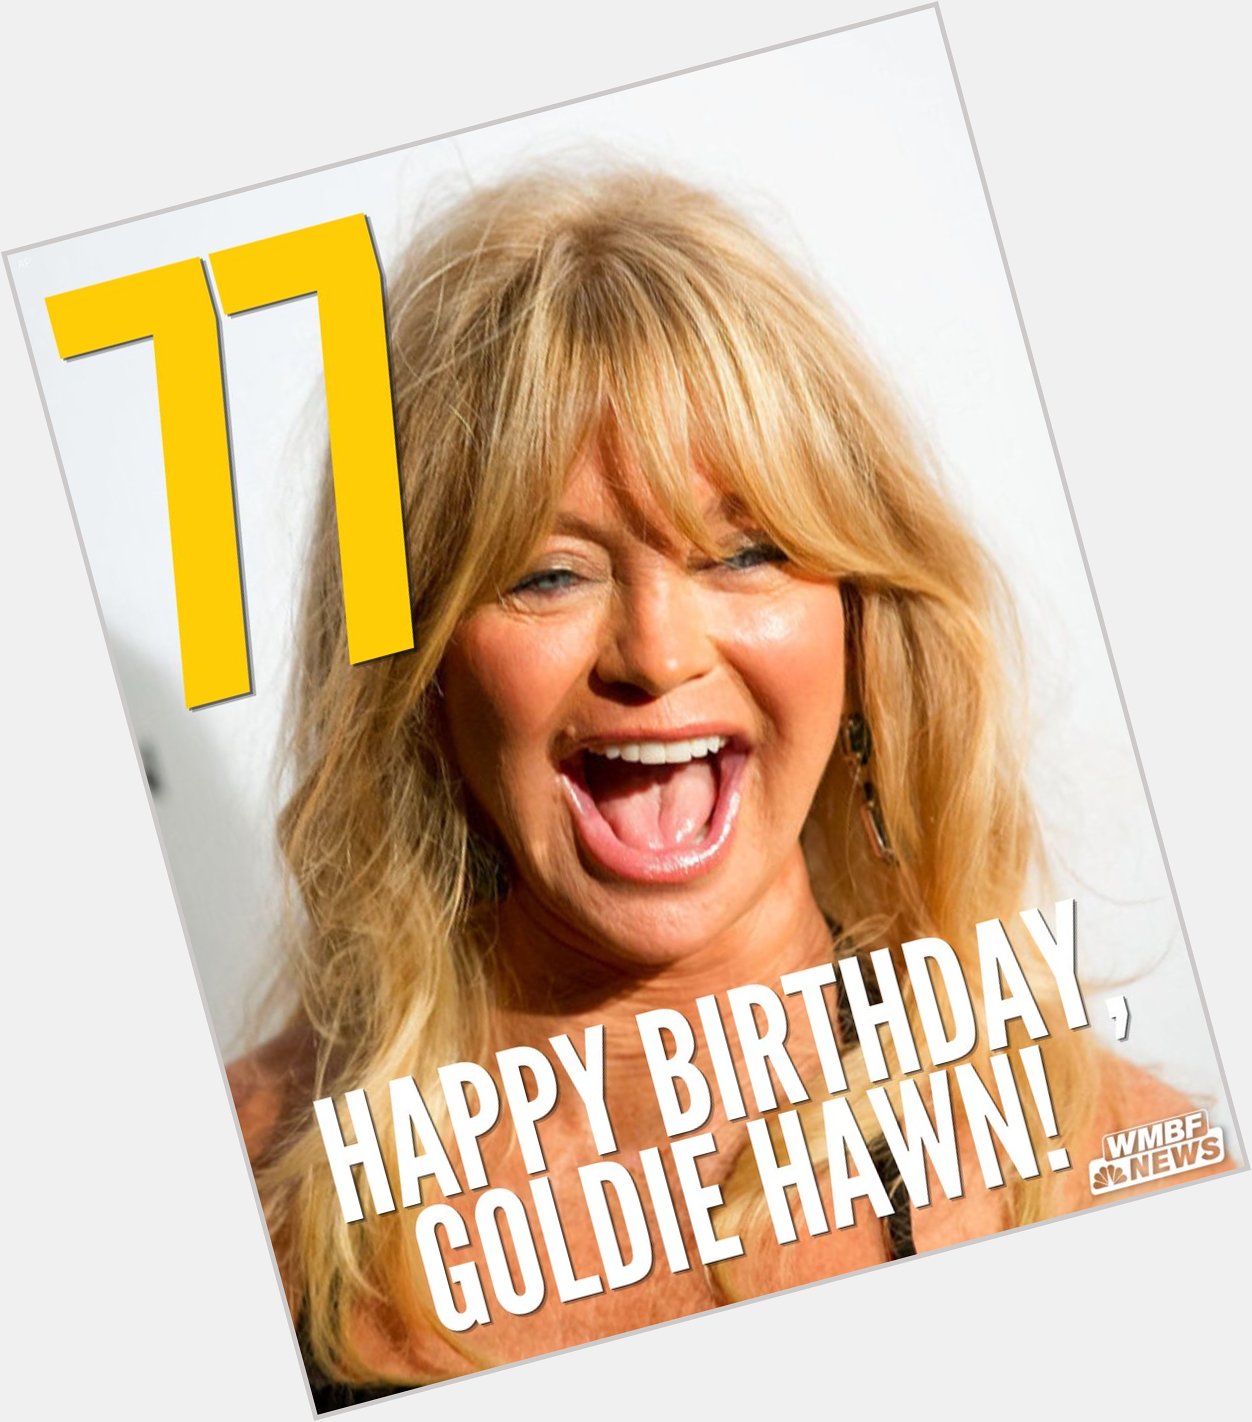 Happy birthday! Goldie Hawn celebrates her 77th birthday today! 